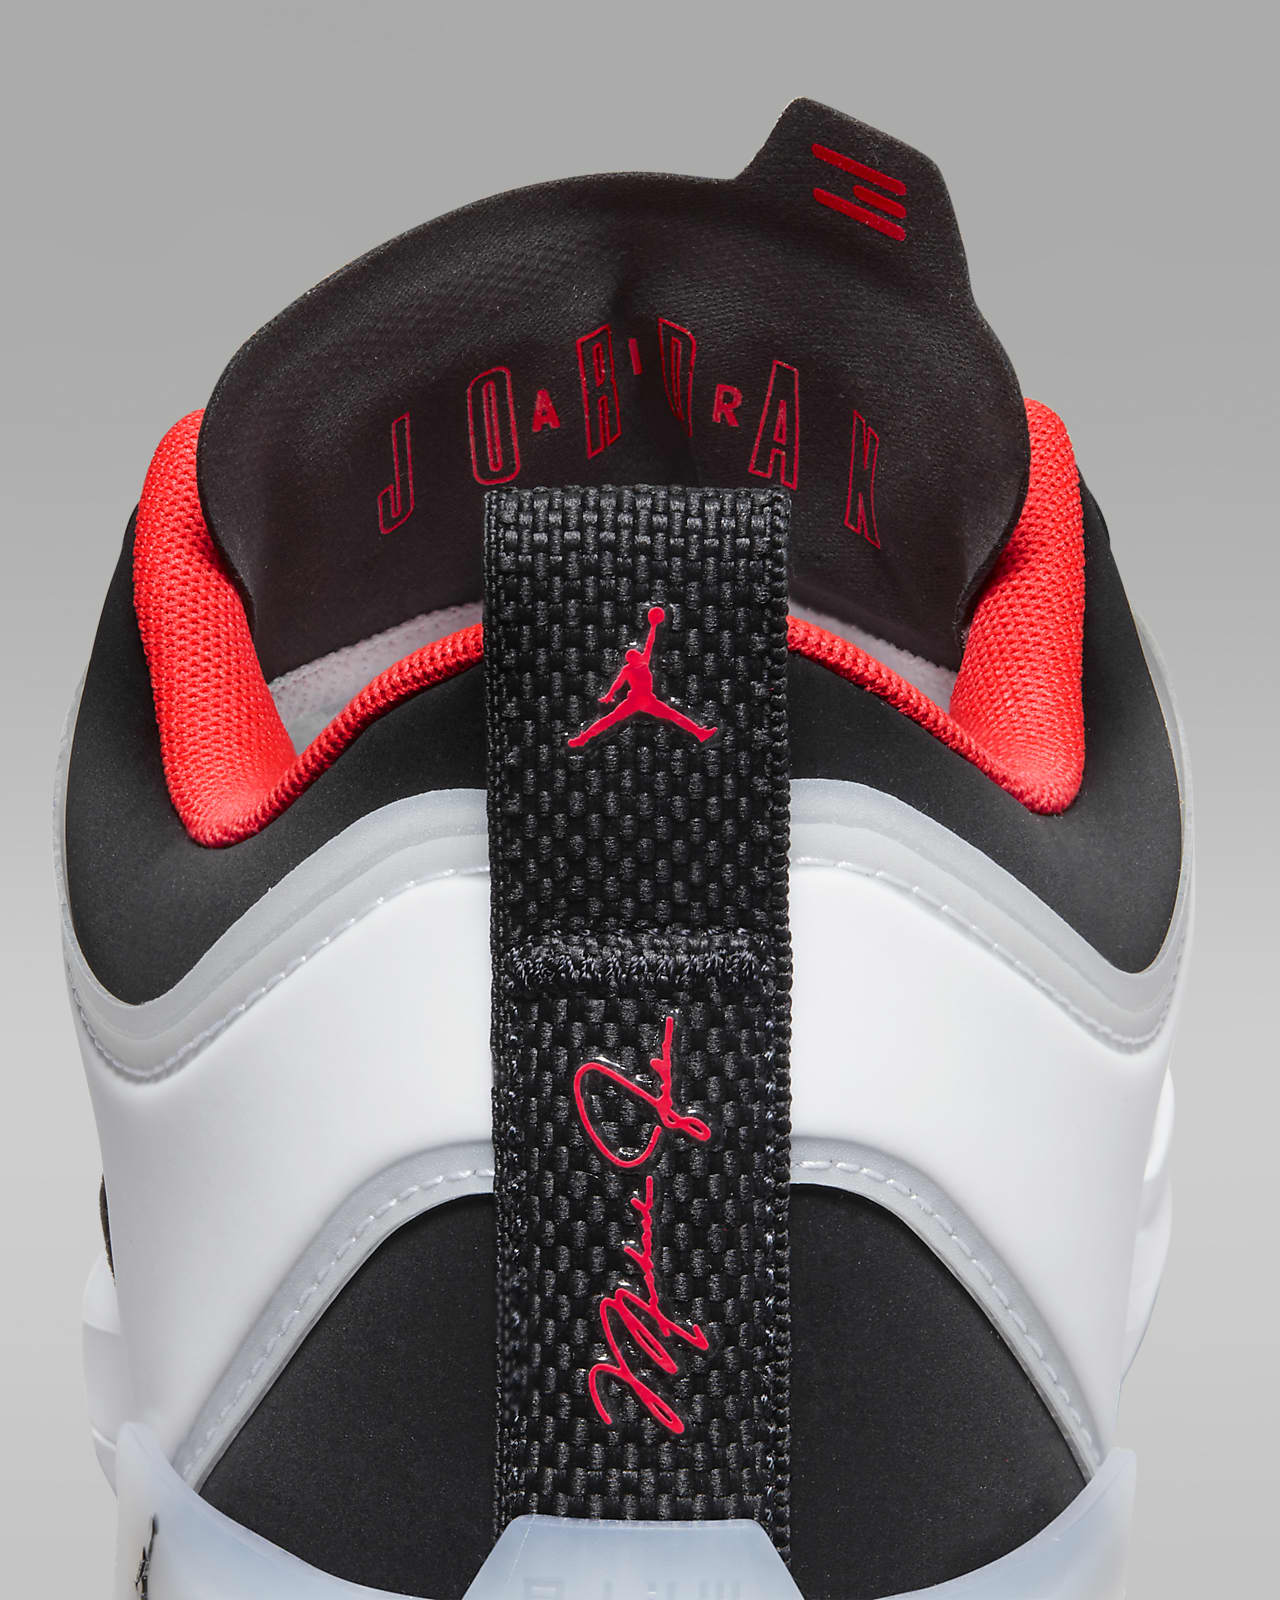 Air Jordan XXXVII Low Basketball Shoes